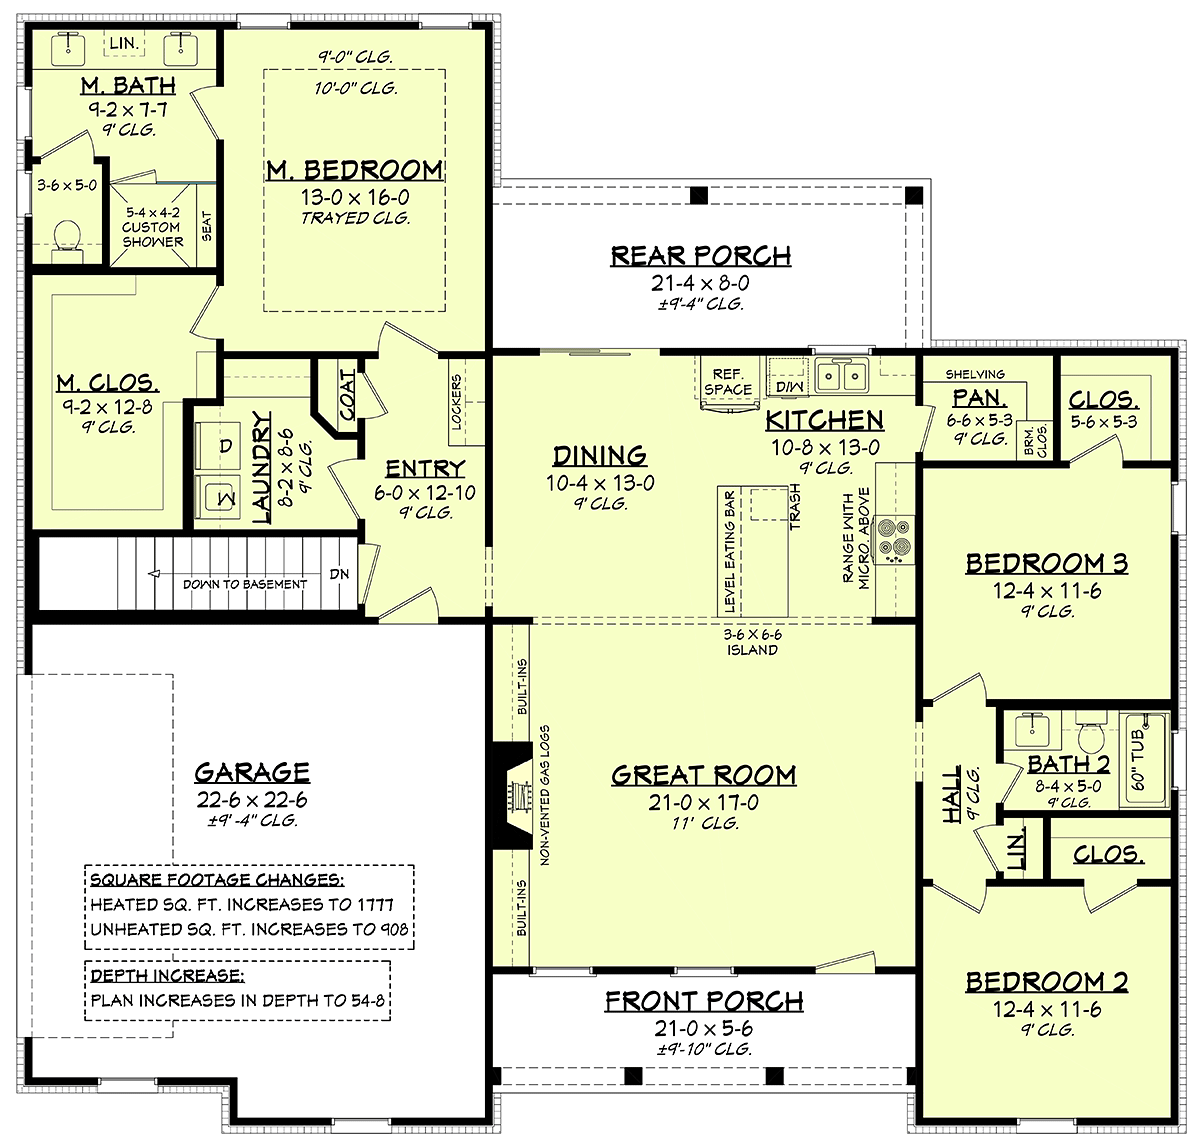 House Plan 80802 Alternate Level One